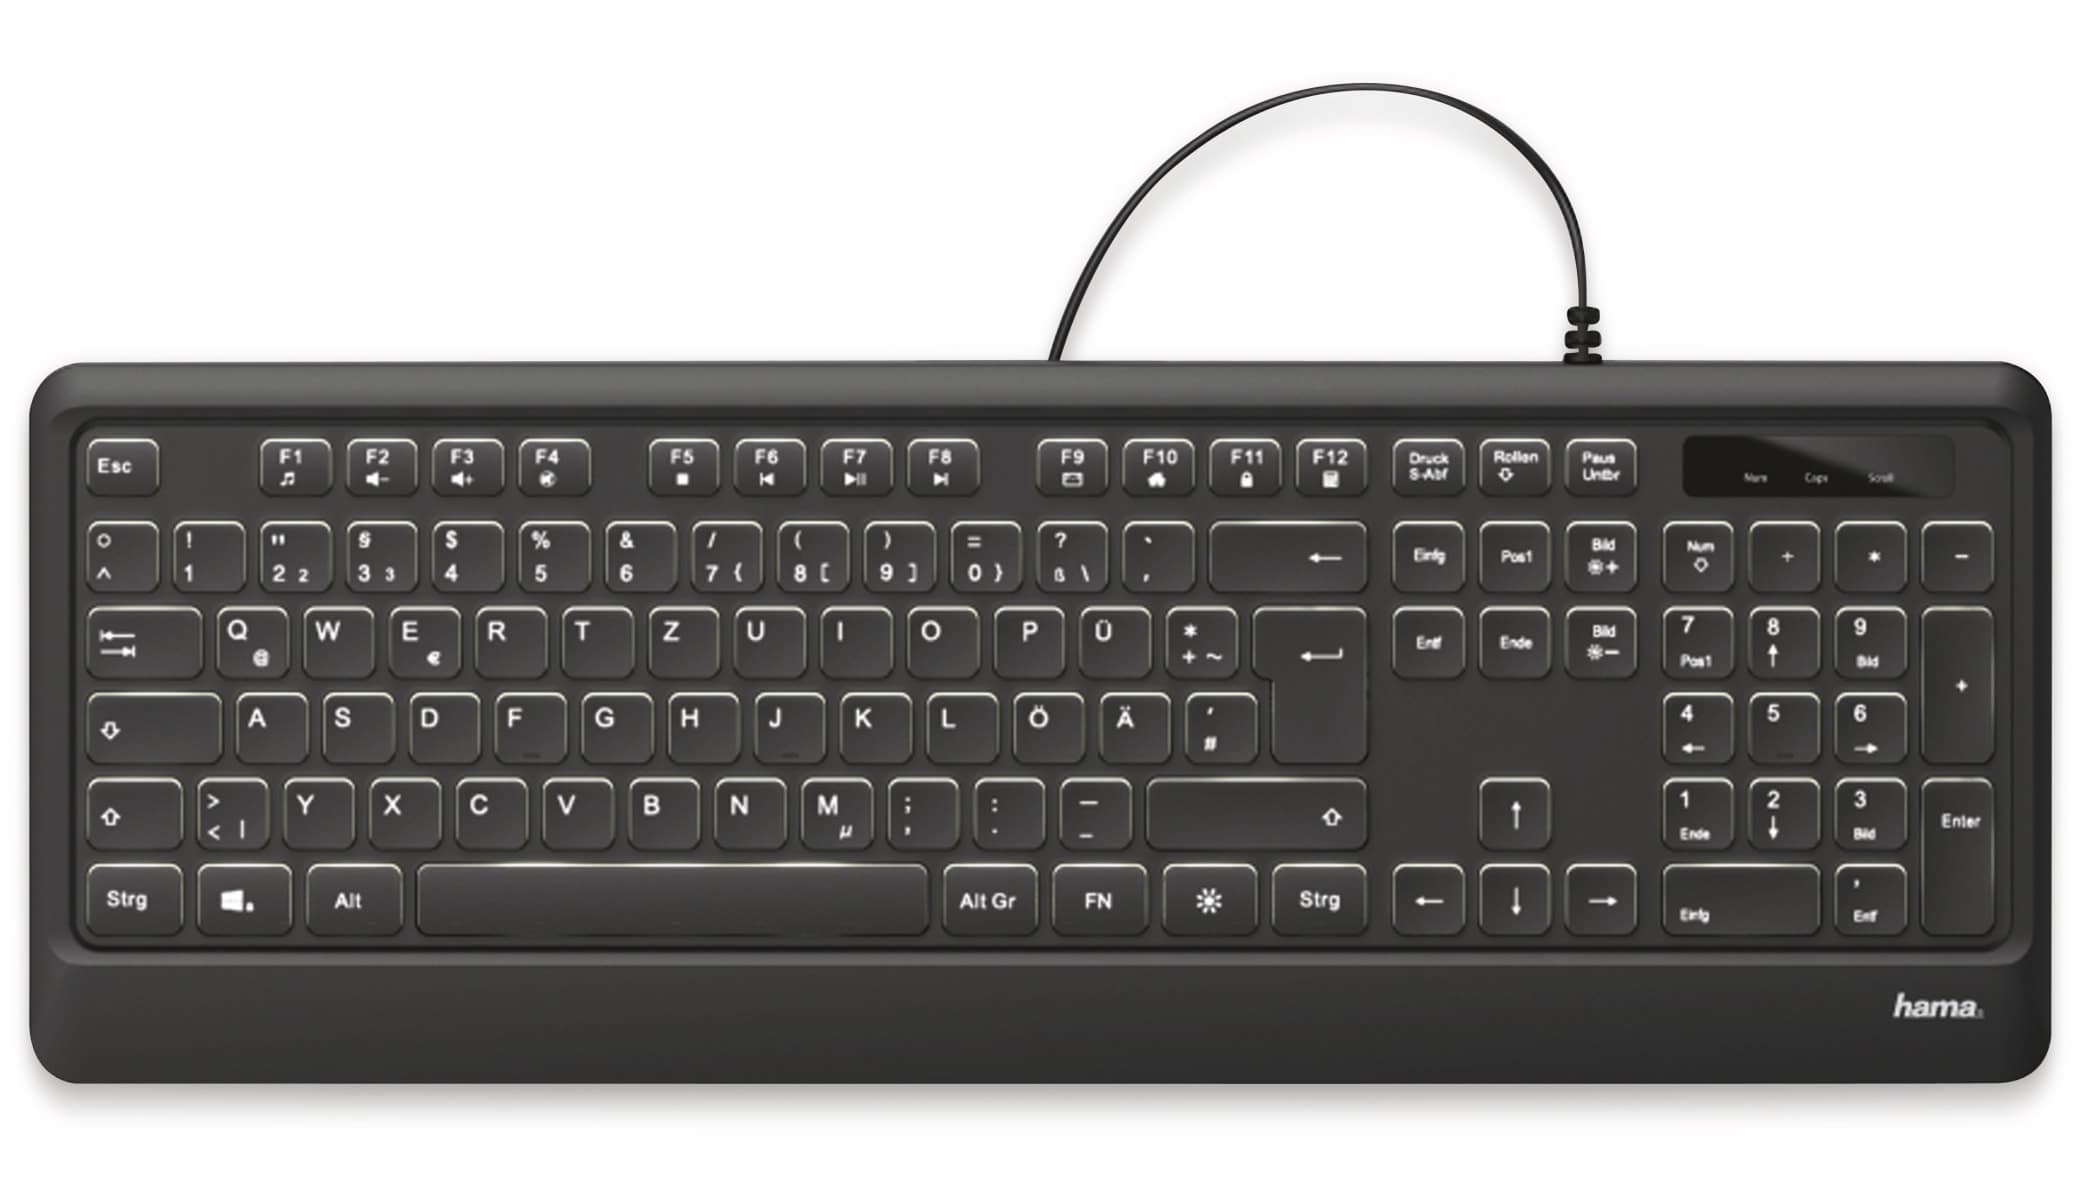 HAMA USB-Tastatur KC-550, Beleuchtet, schwarz